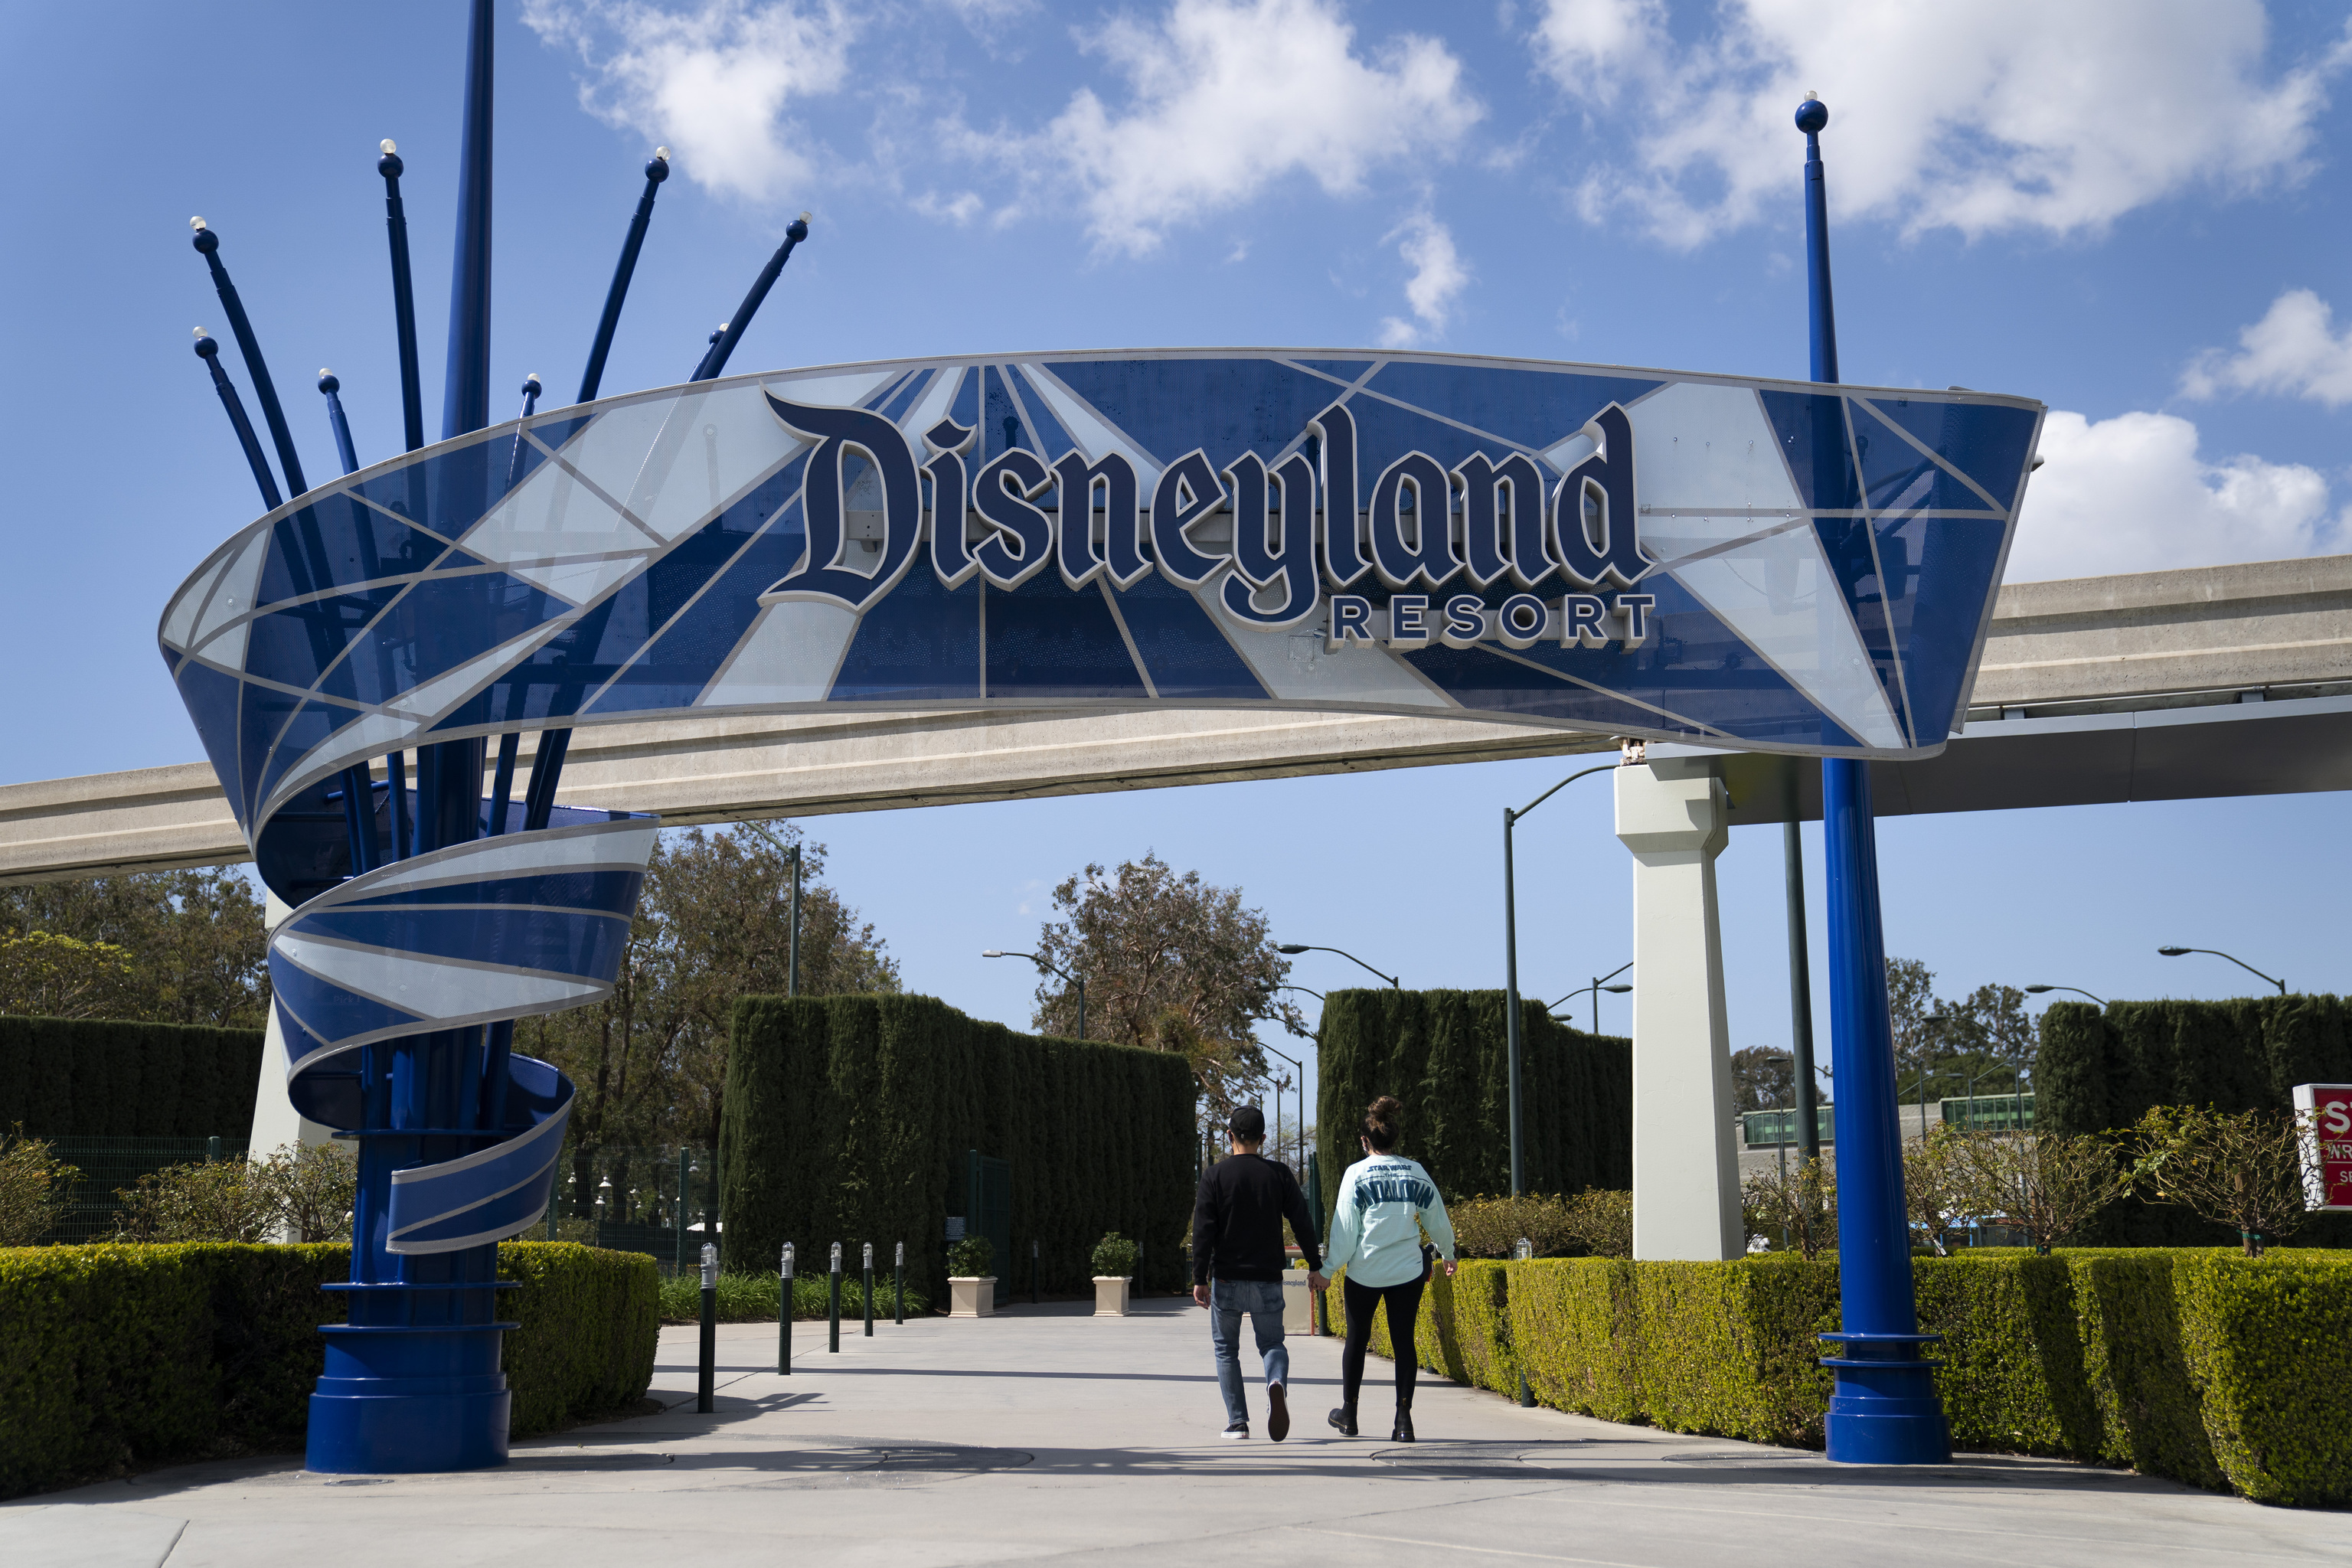 The Disneyland Resort entrance.